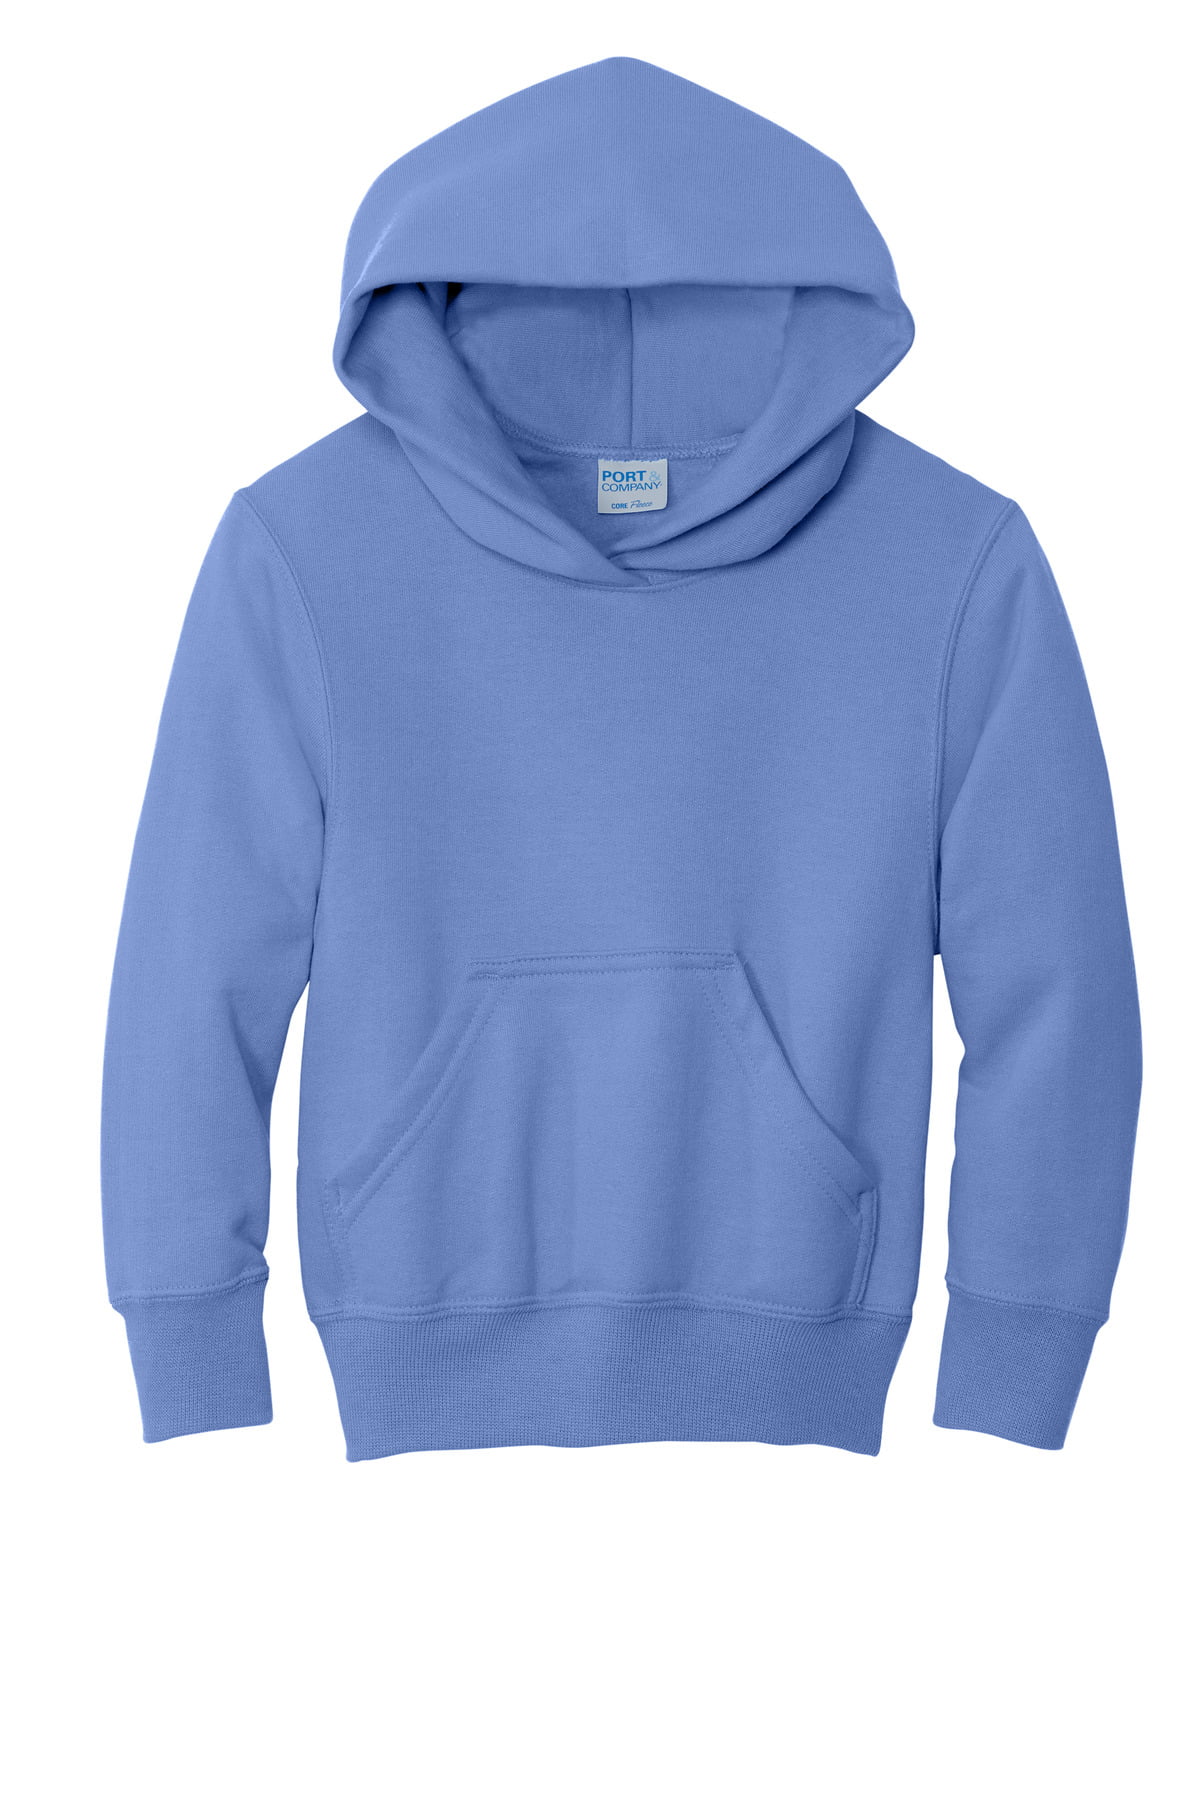 & Fleece Pullover Youth Port Sweatshirt-L Blue) Core Hooded (Carolina Company